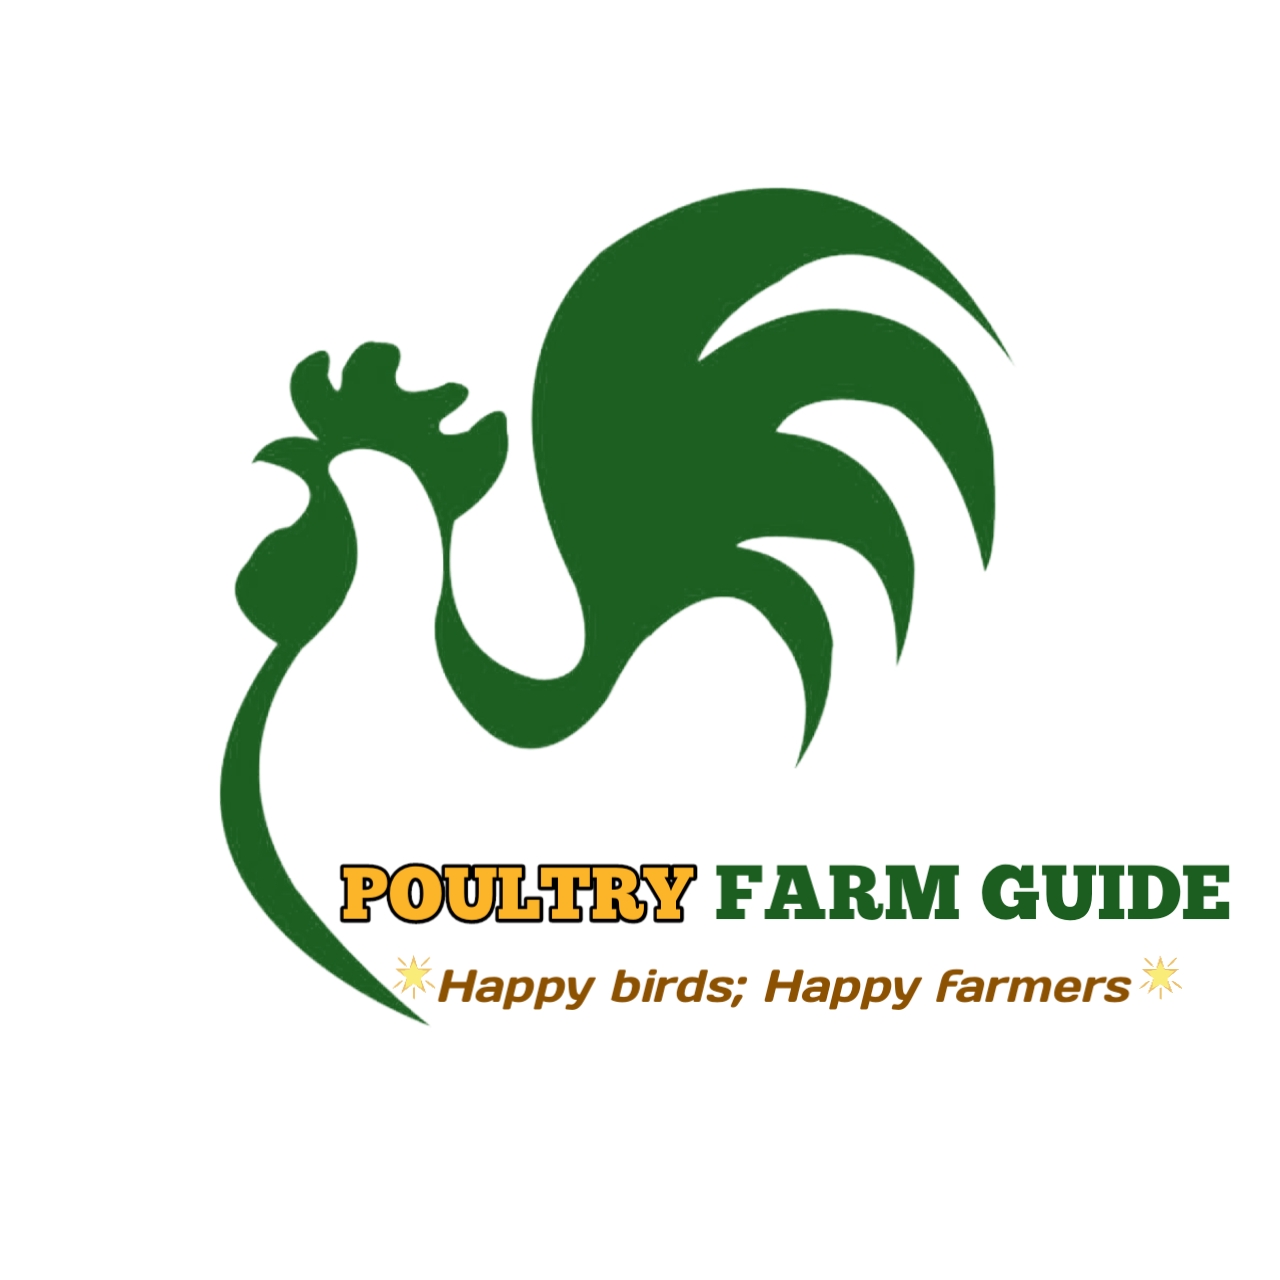 Chicken farm logo Vectors & Illustrations for Free Download | Freepik